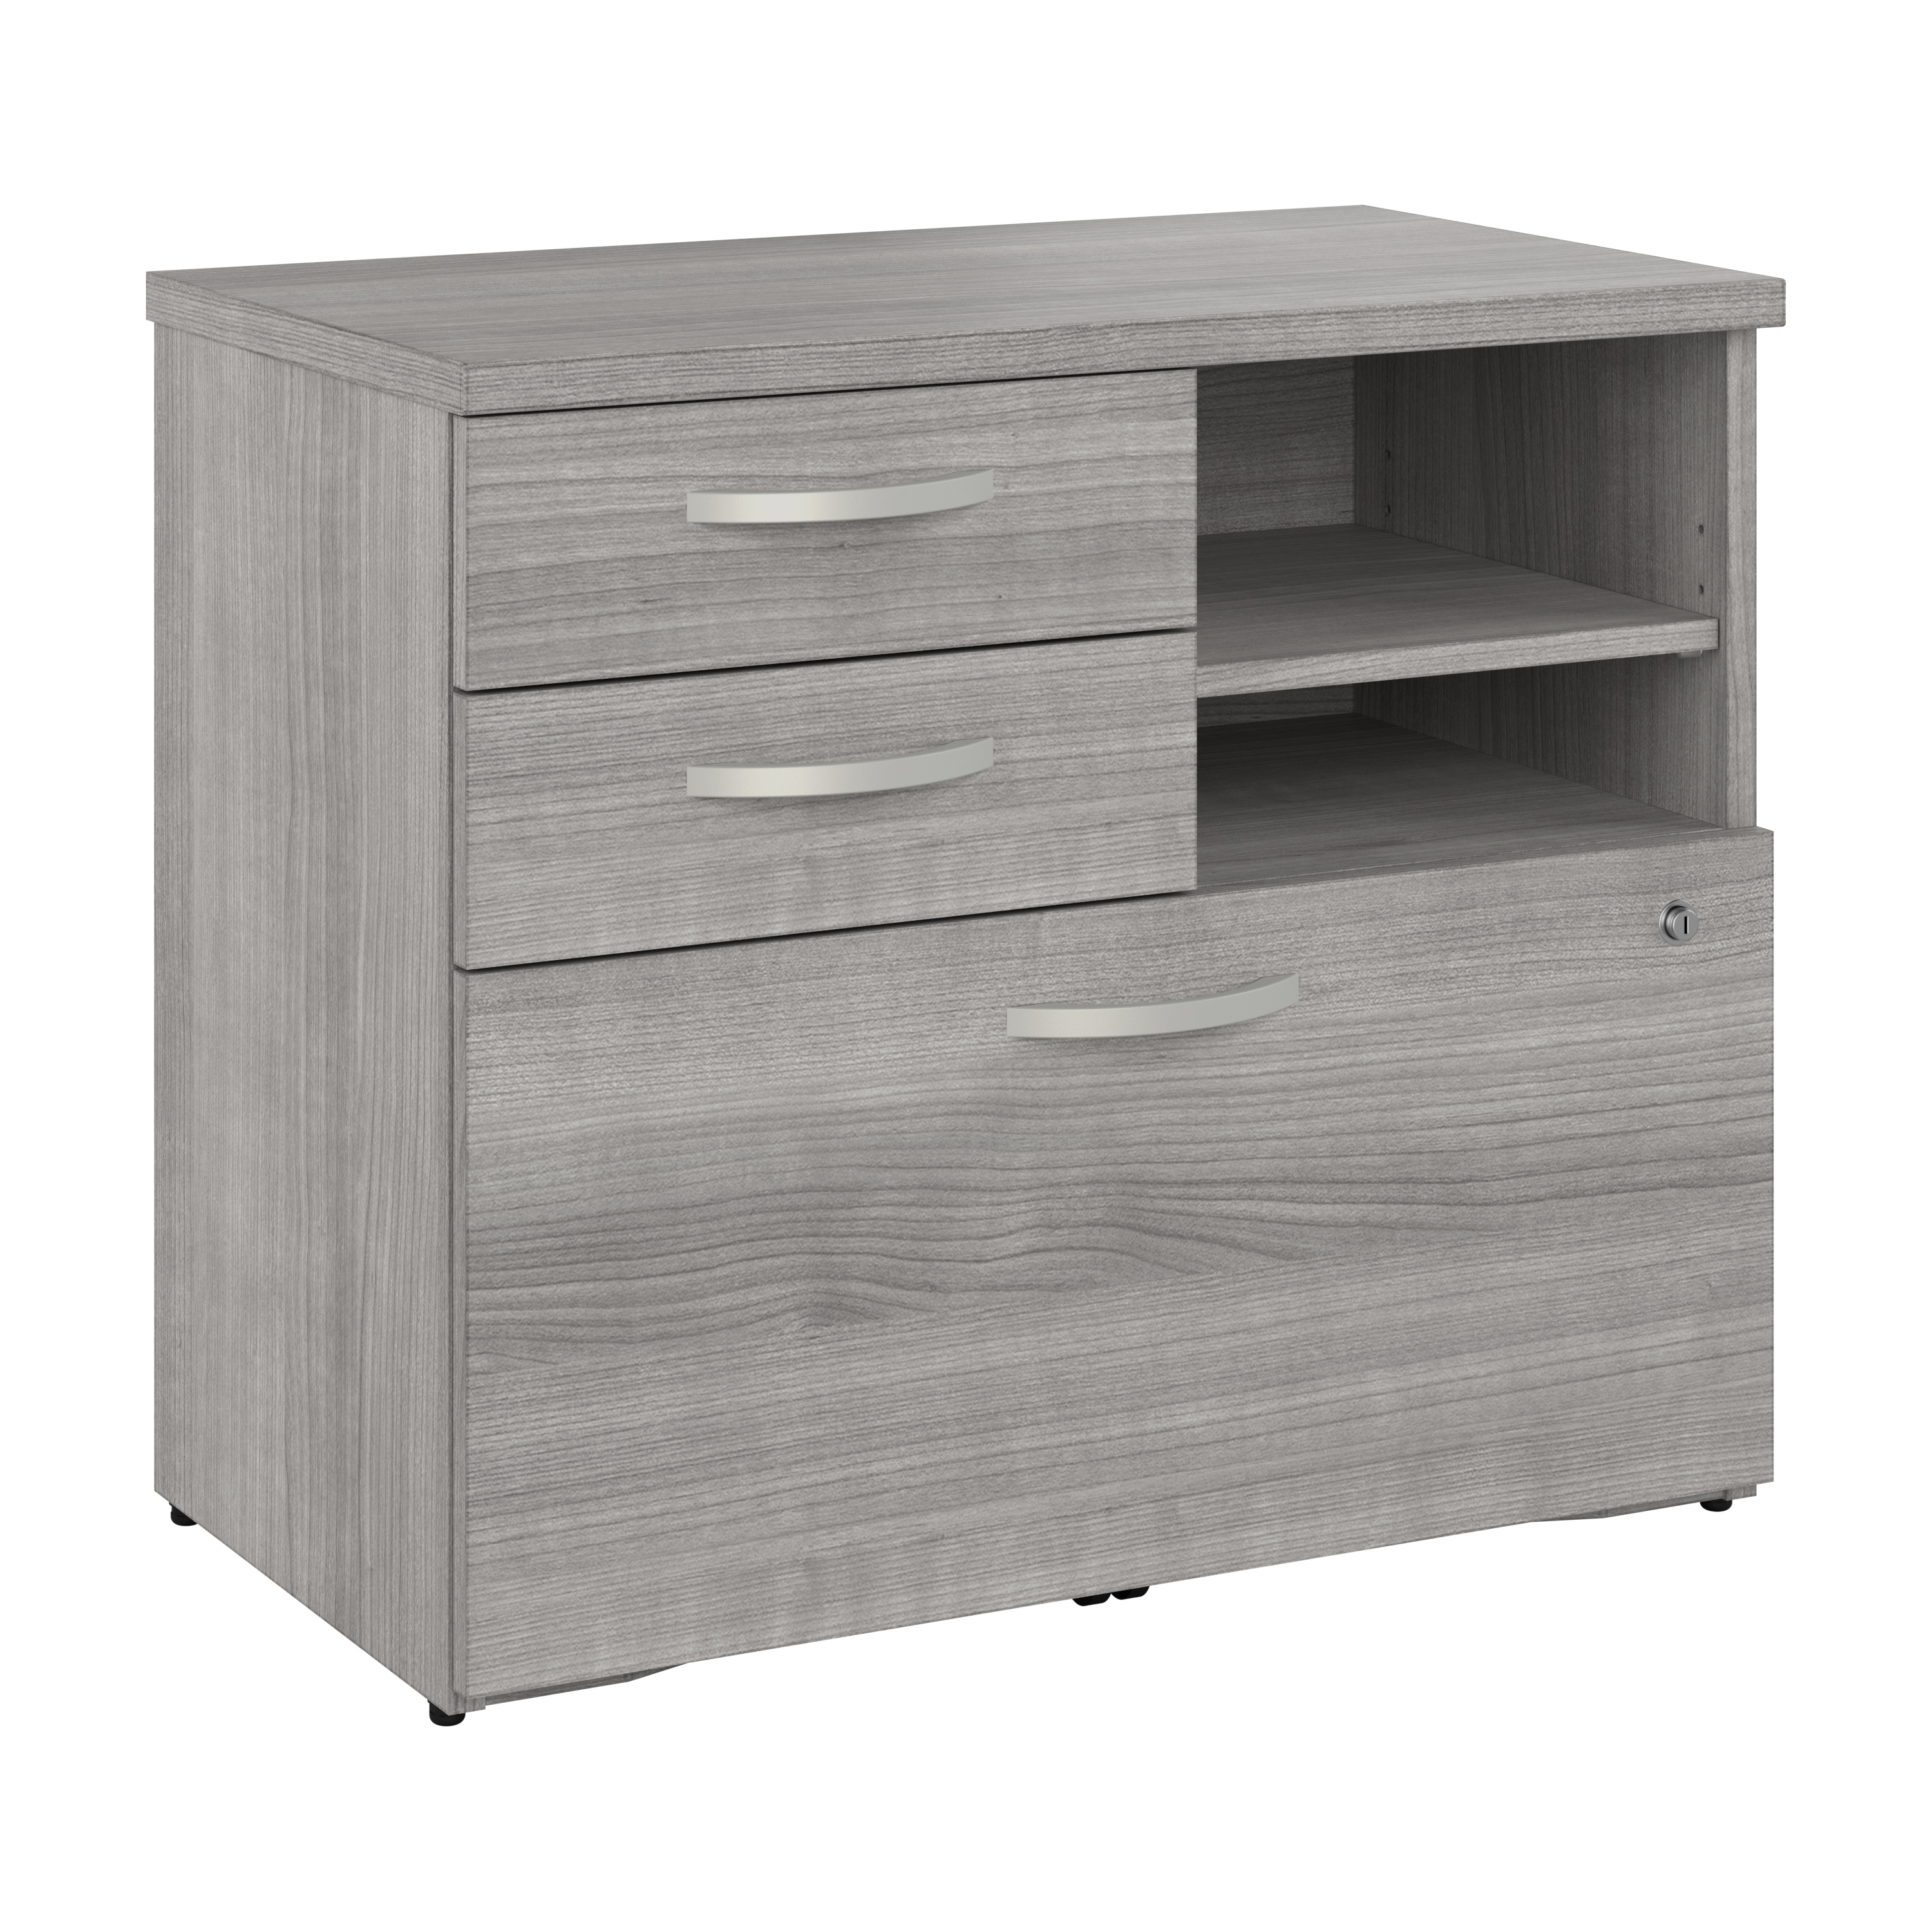 Shop Bush Business Furniture Studio C Office Storage Cabinet with Drawers and Shelves 02 SCF130PGSU #color_platinum gray